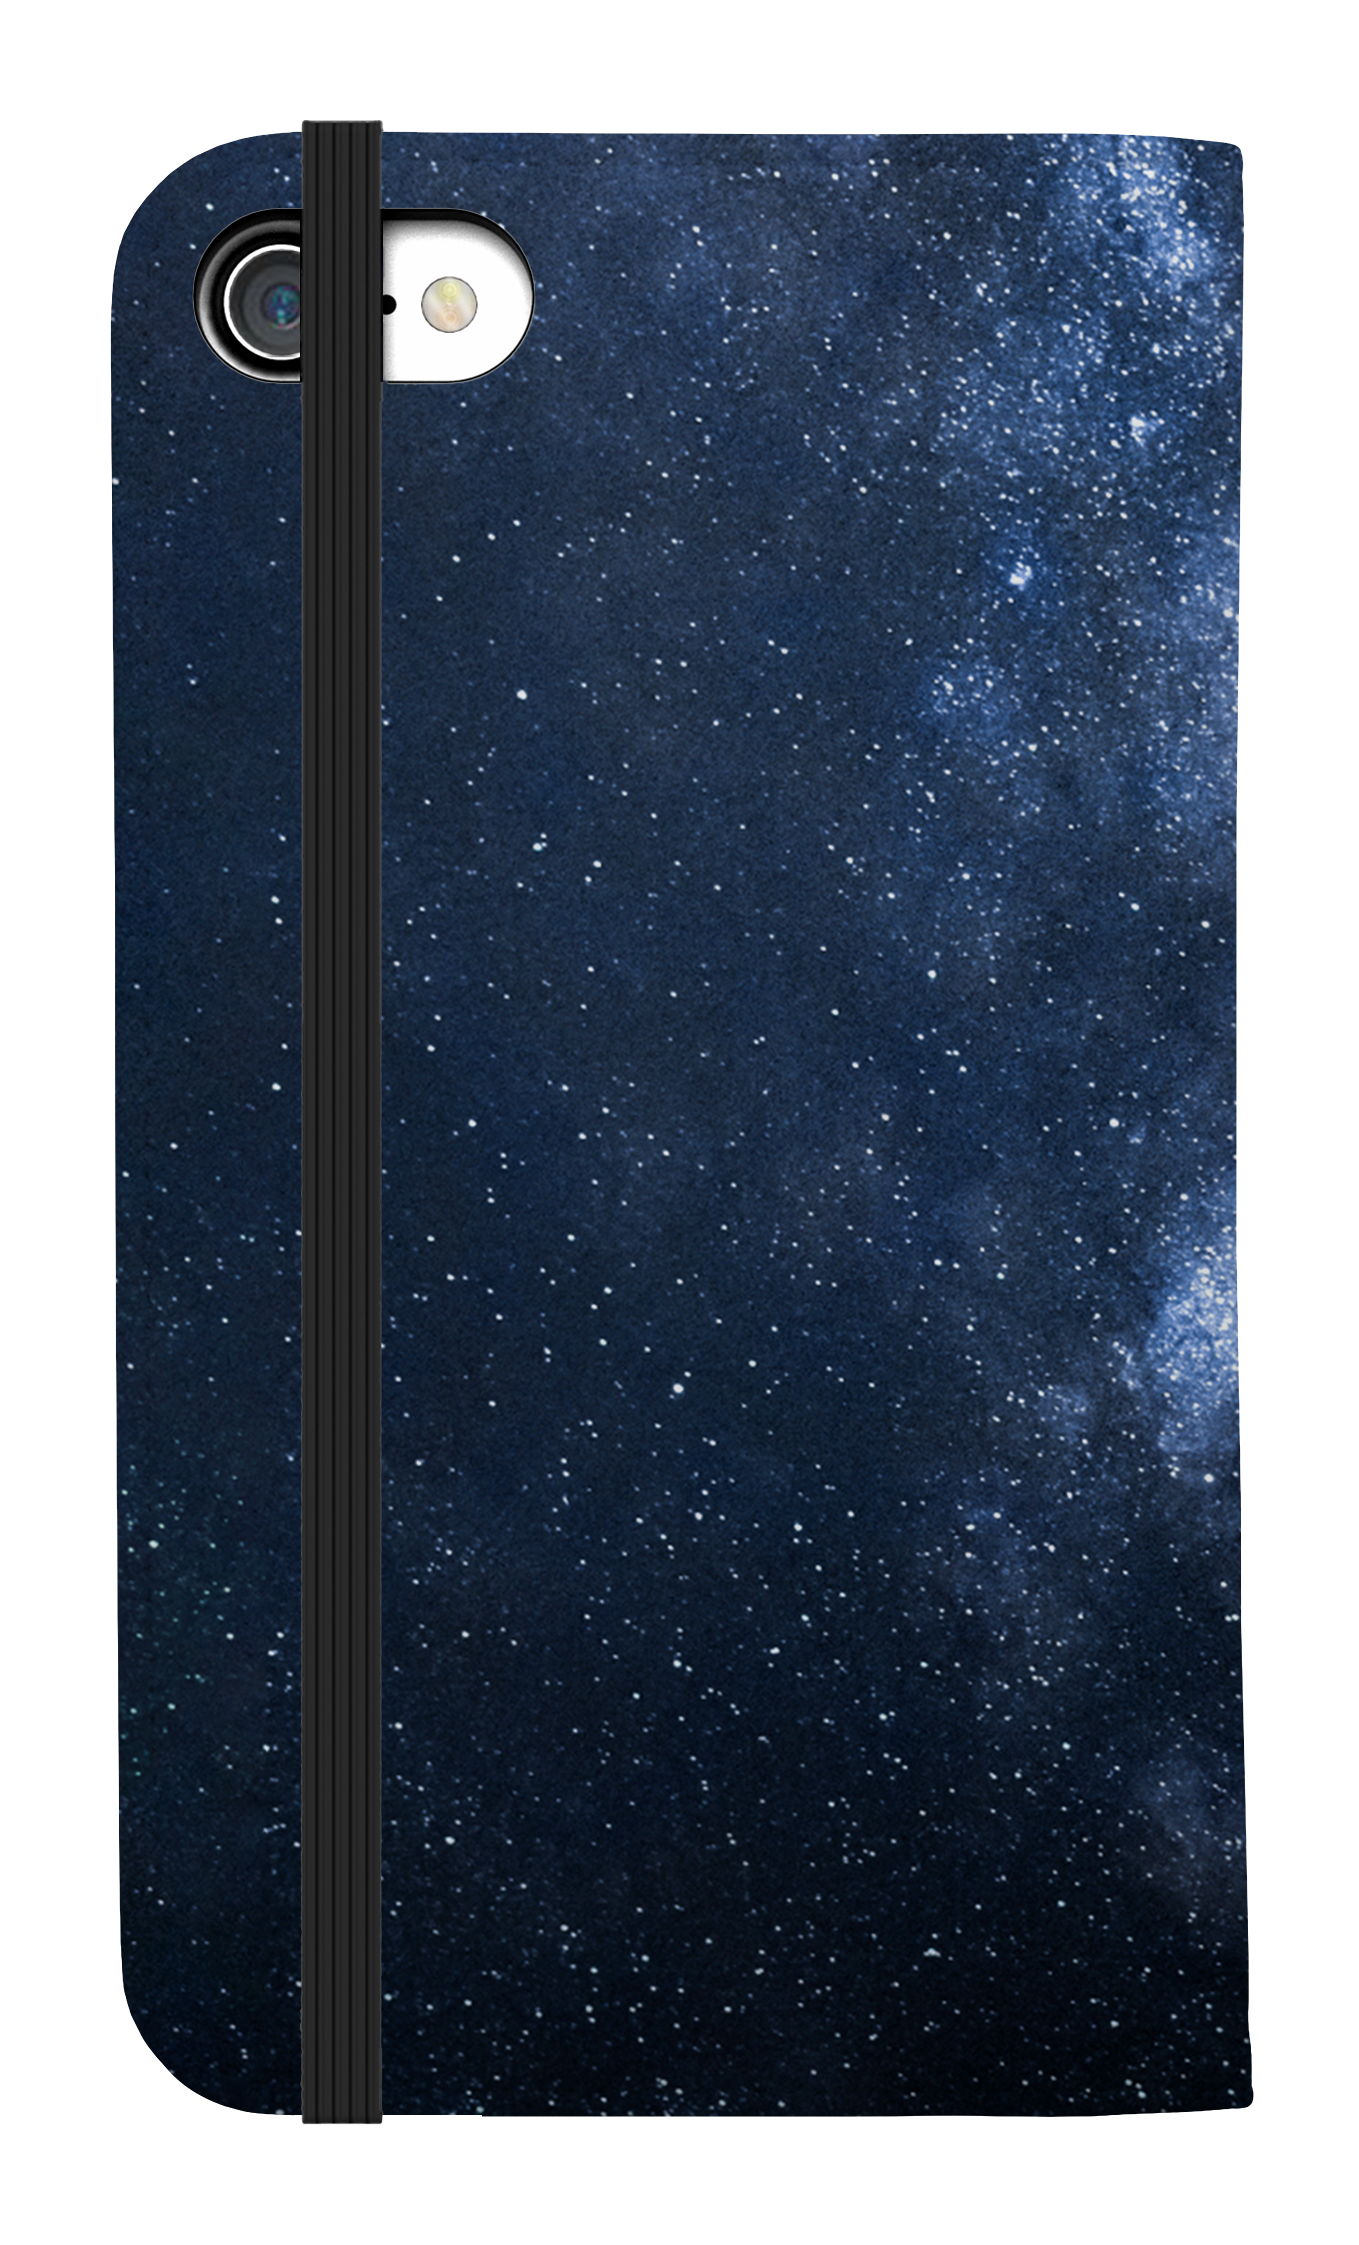 Falcon 9 - Folio Case - iPhone 7